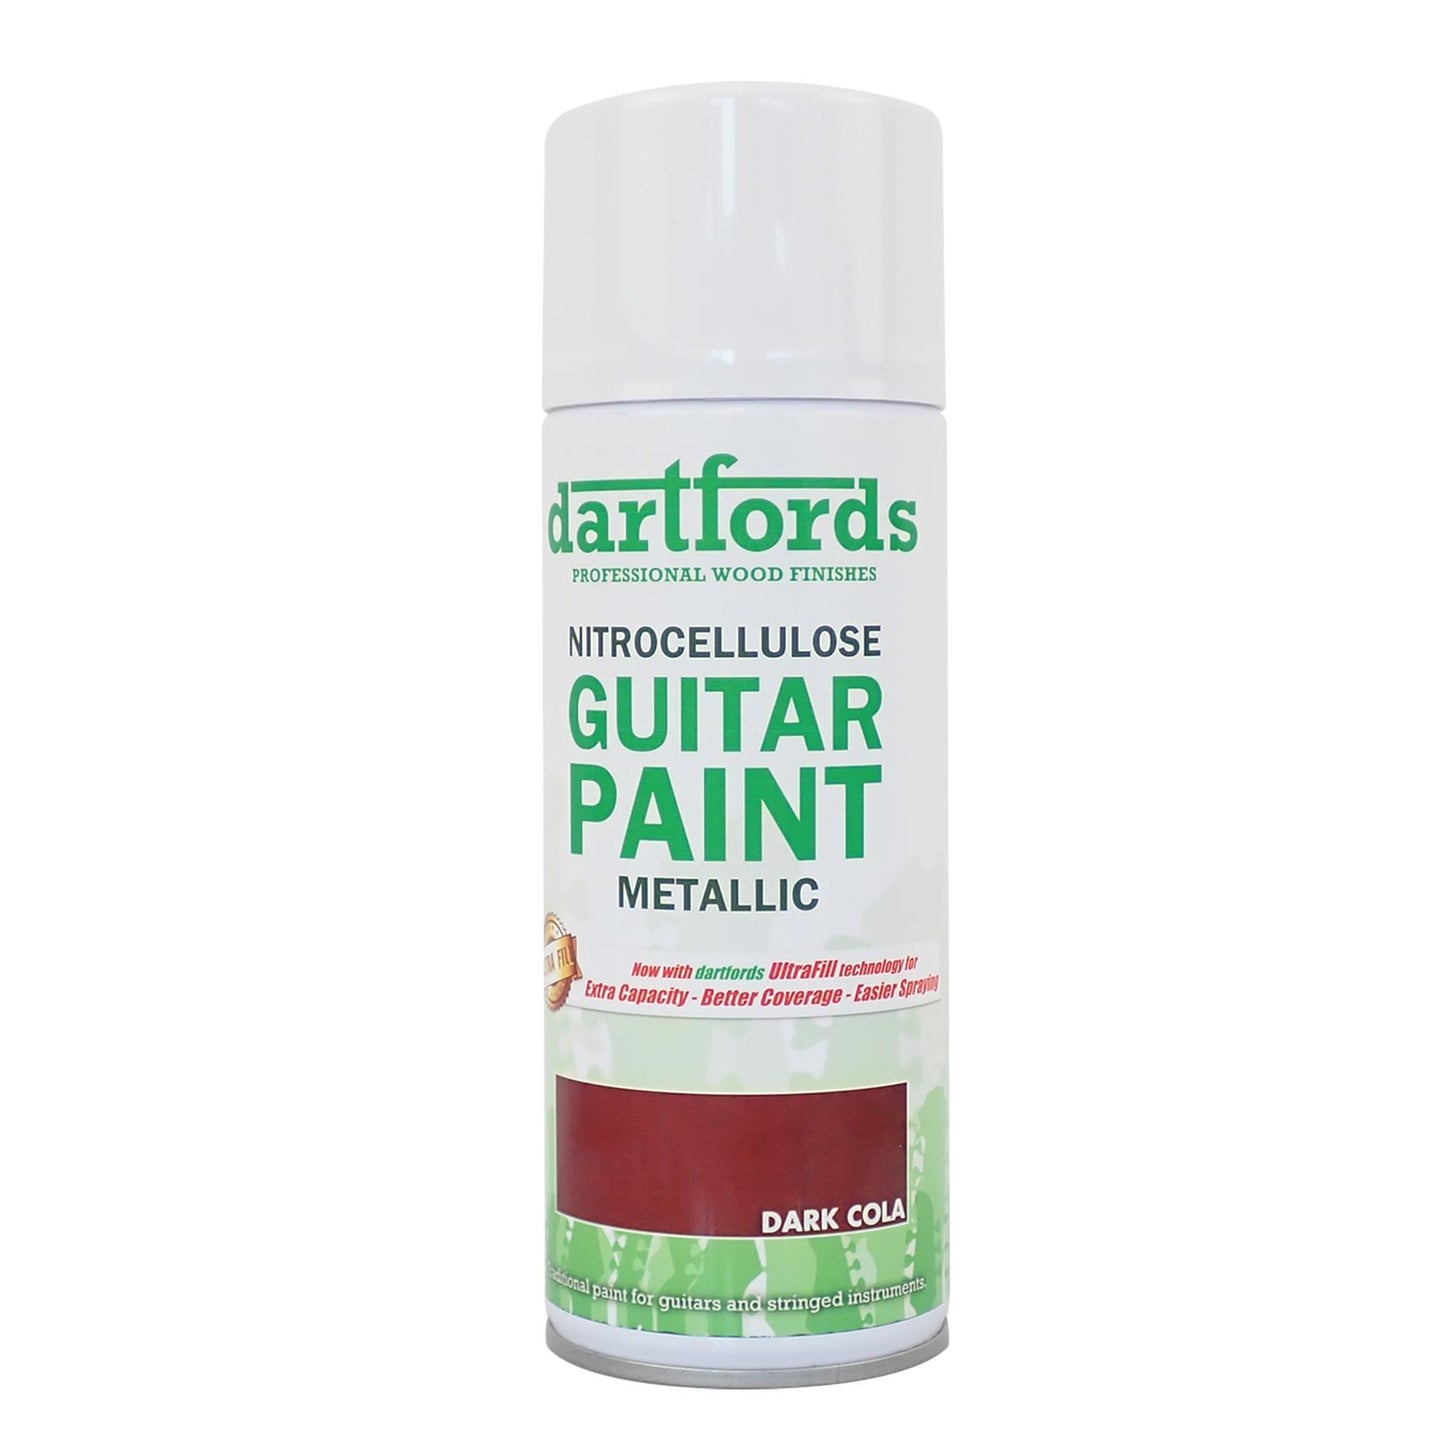 dartfords Dark Cola Metallic Nitrocellulose Guitar Paint - 400ml Aerosol